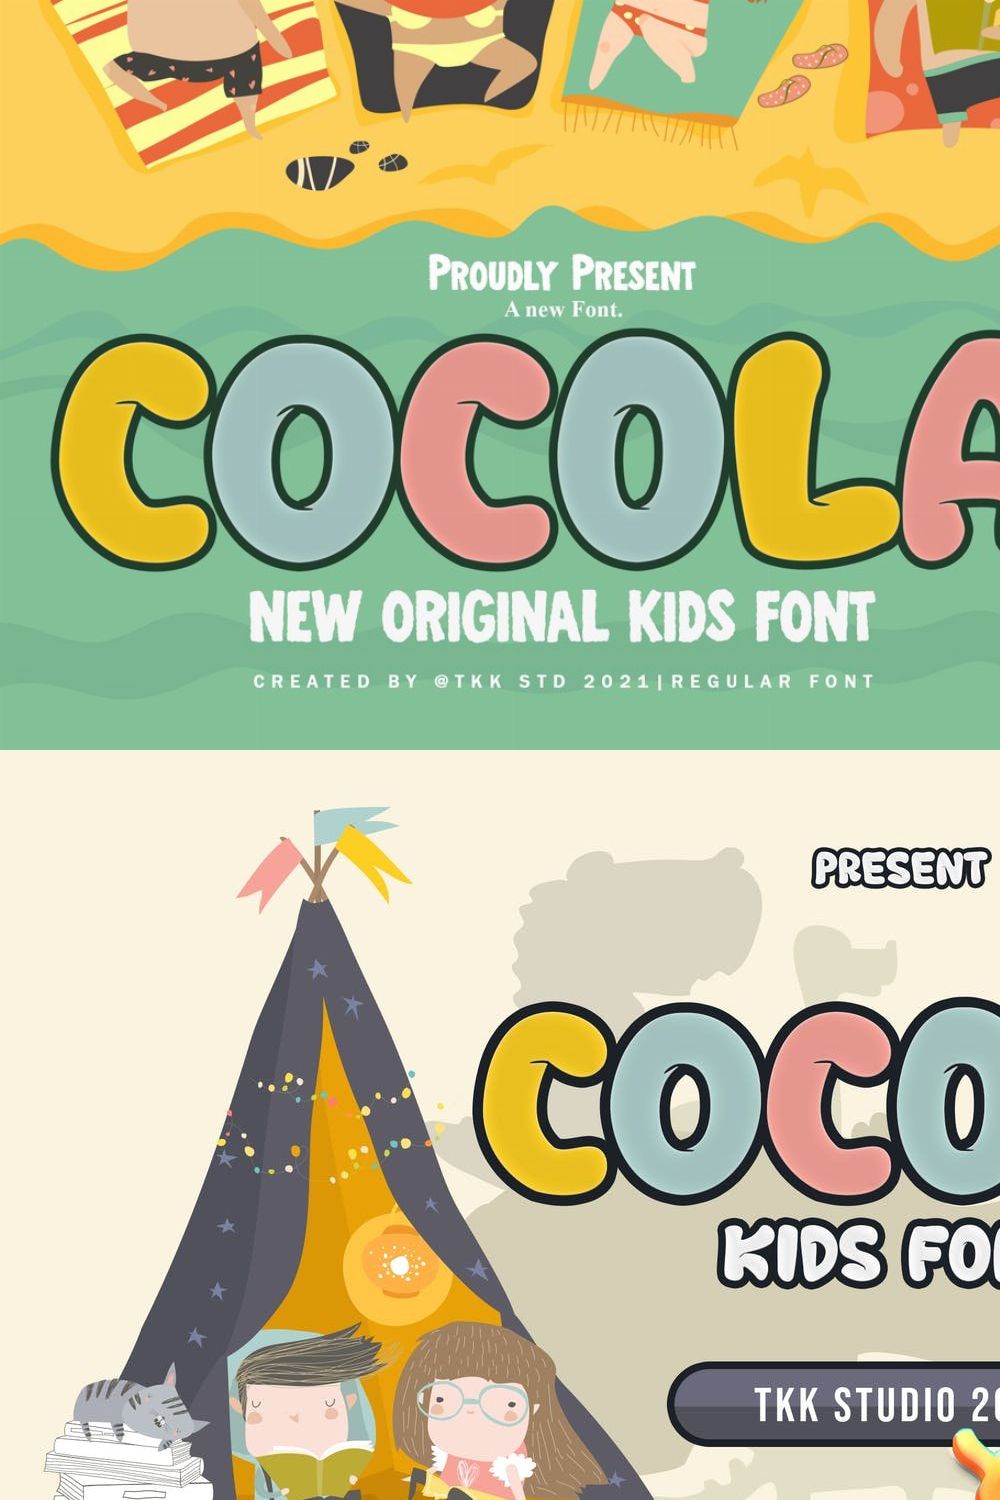 COCOLA - Kids Font pinterest preview image.